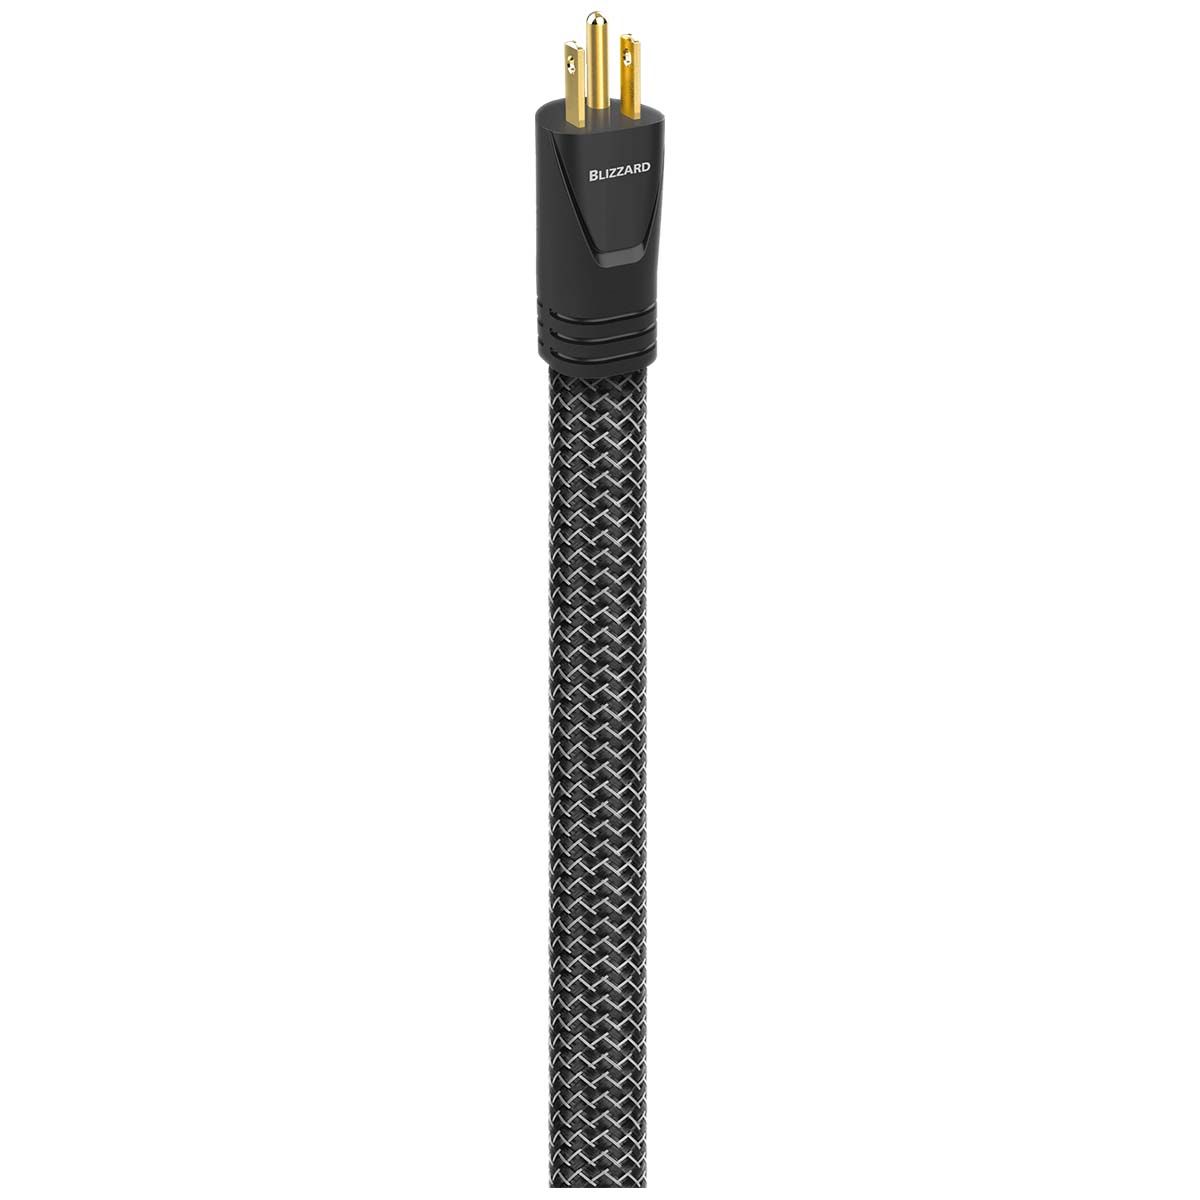 AudioQuest Blizzard AC Power Cable, outlet end